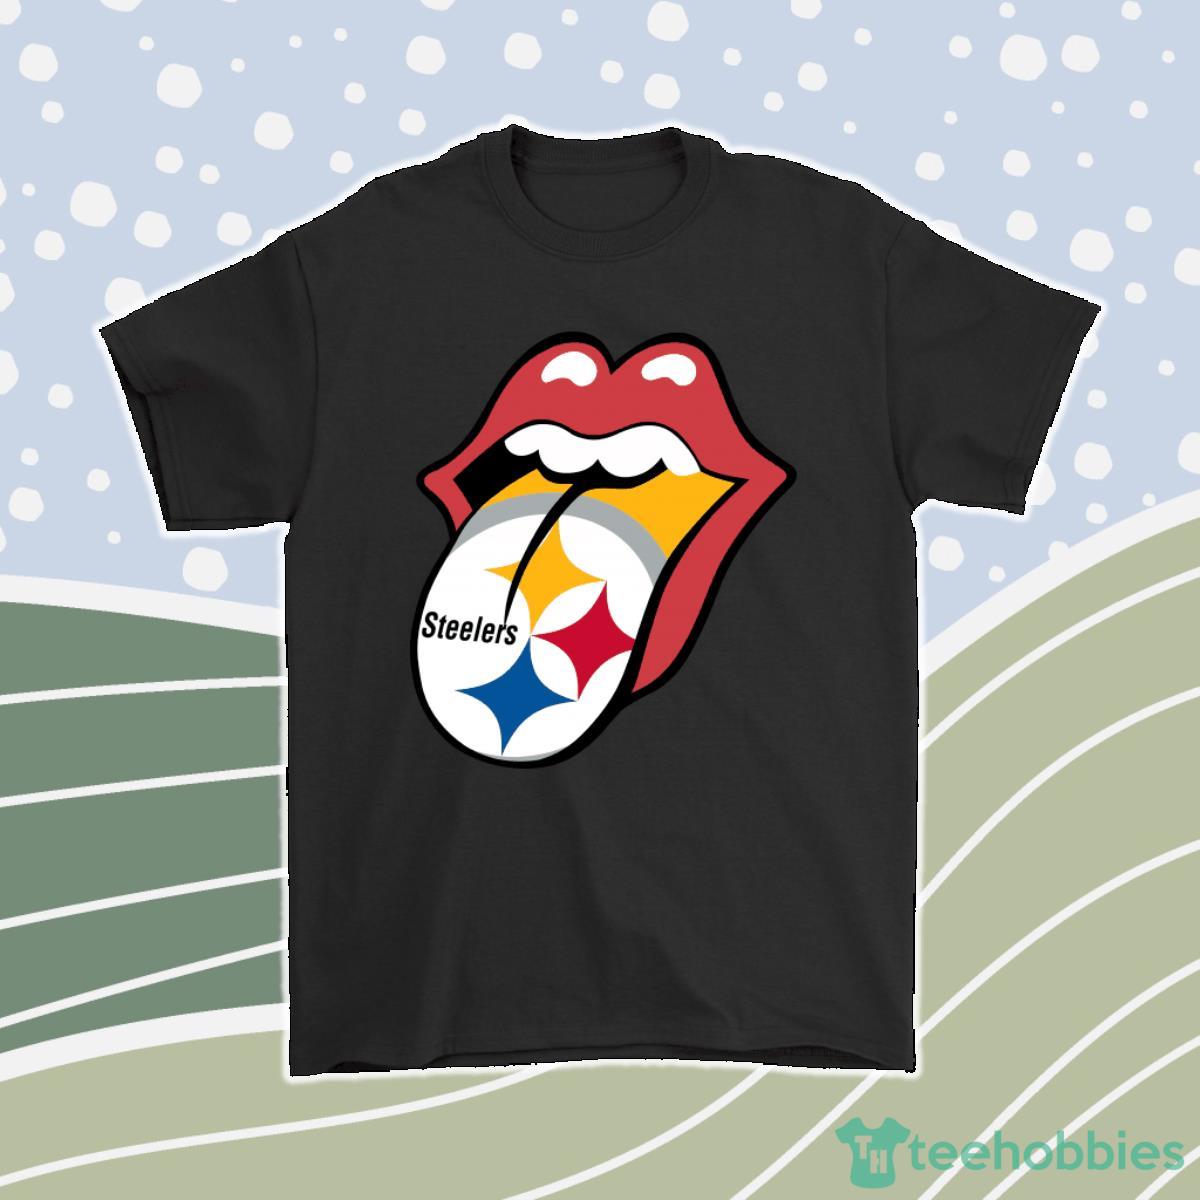 The Rolling Stones Logo X Pittsburgh Steelers Mashup Nfl Men Women T-Shirt, Hoodie, Sweatshirt Product Photo 1